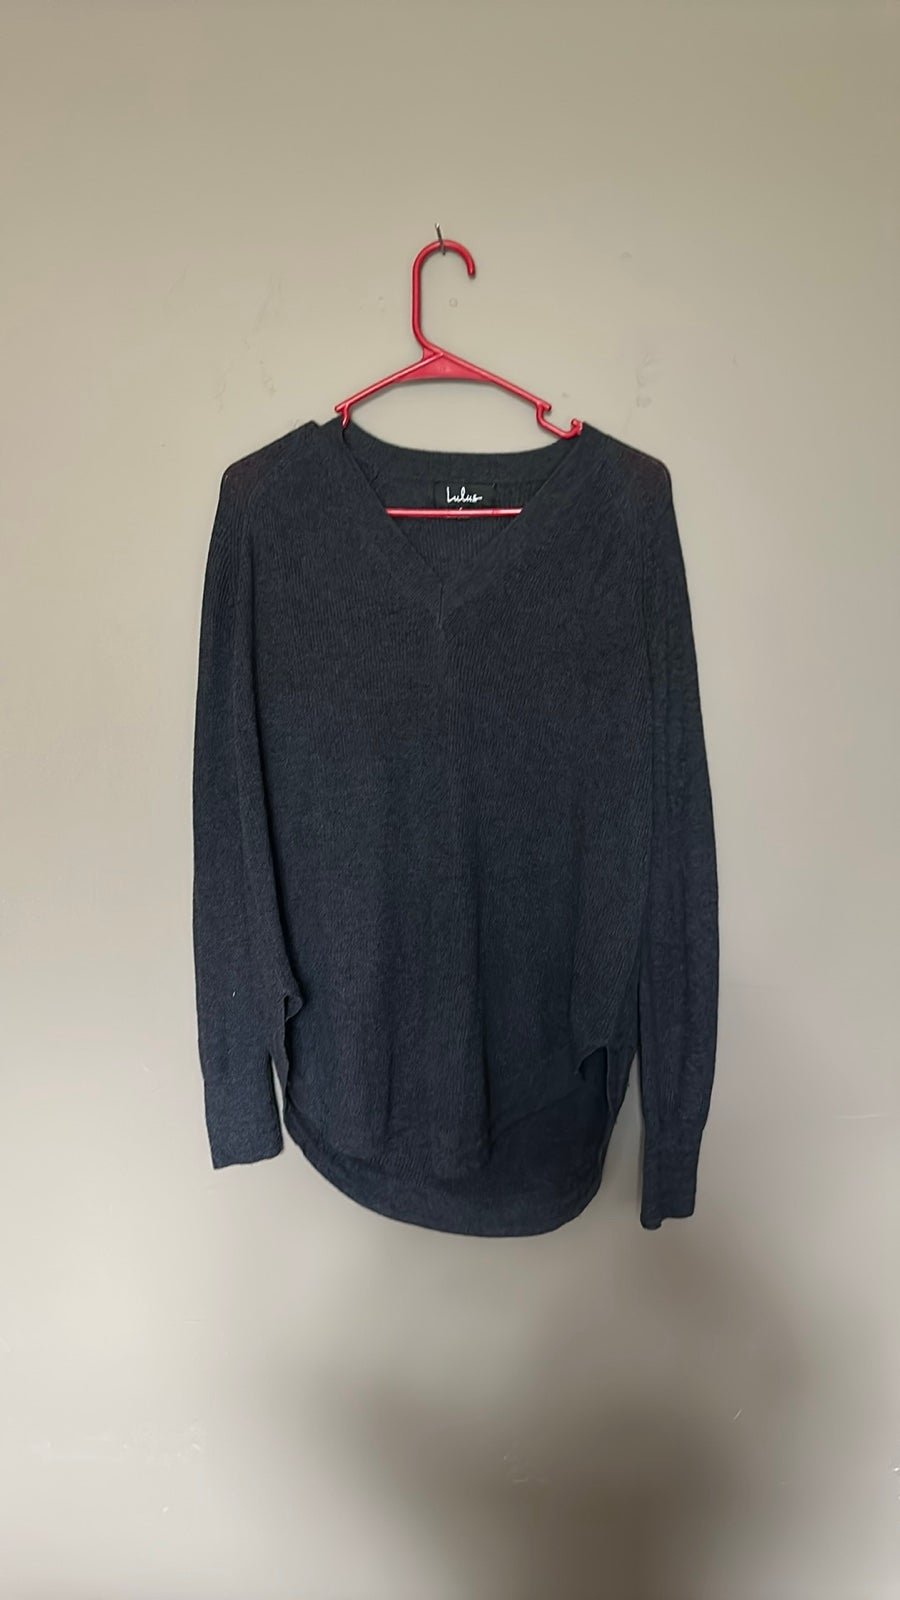 big discount Lulus sweater IMPsQ10JY hot sale